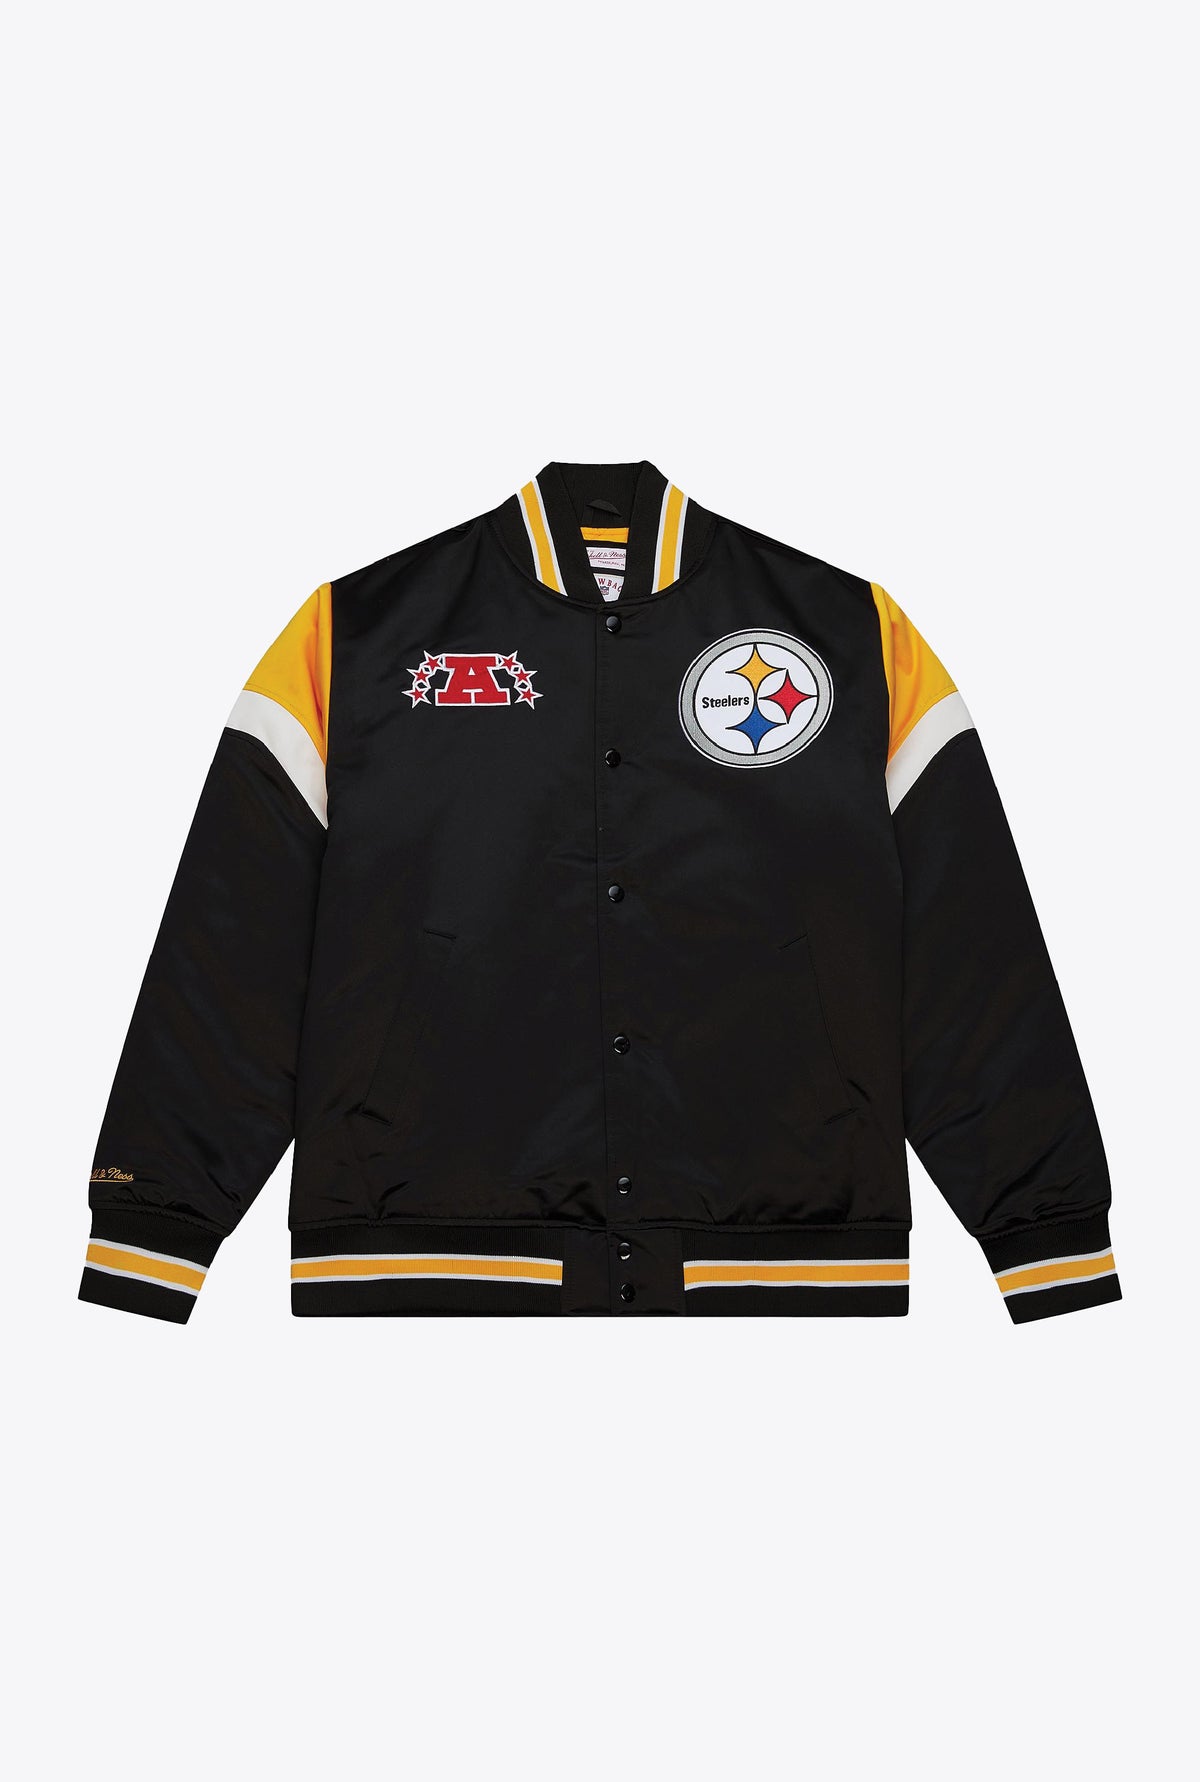 Pittsburgh Steelers Heavyweight Satin Jacket